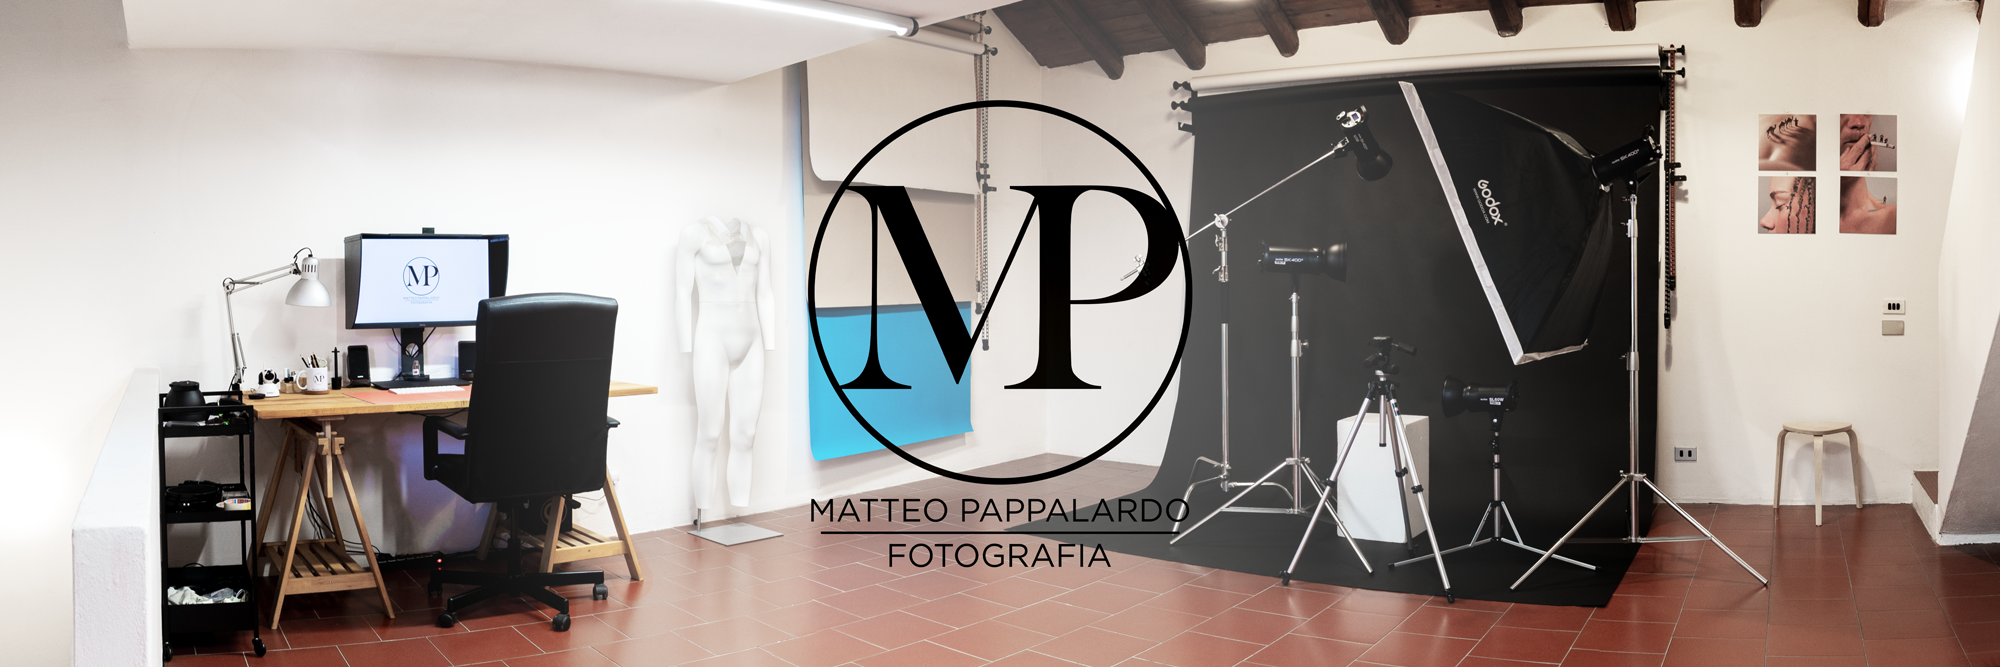 Studio fotografico Still-life Matteo Pappalardo